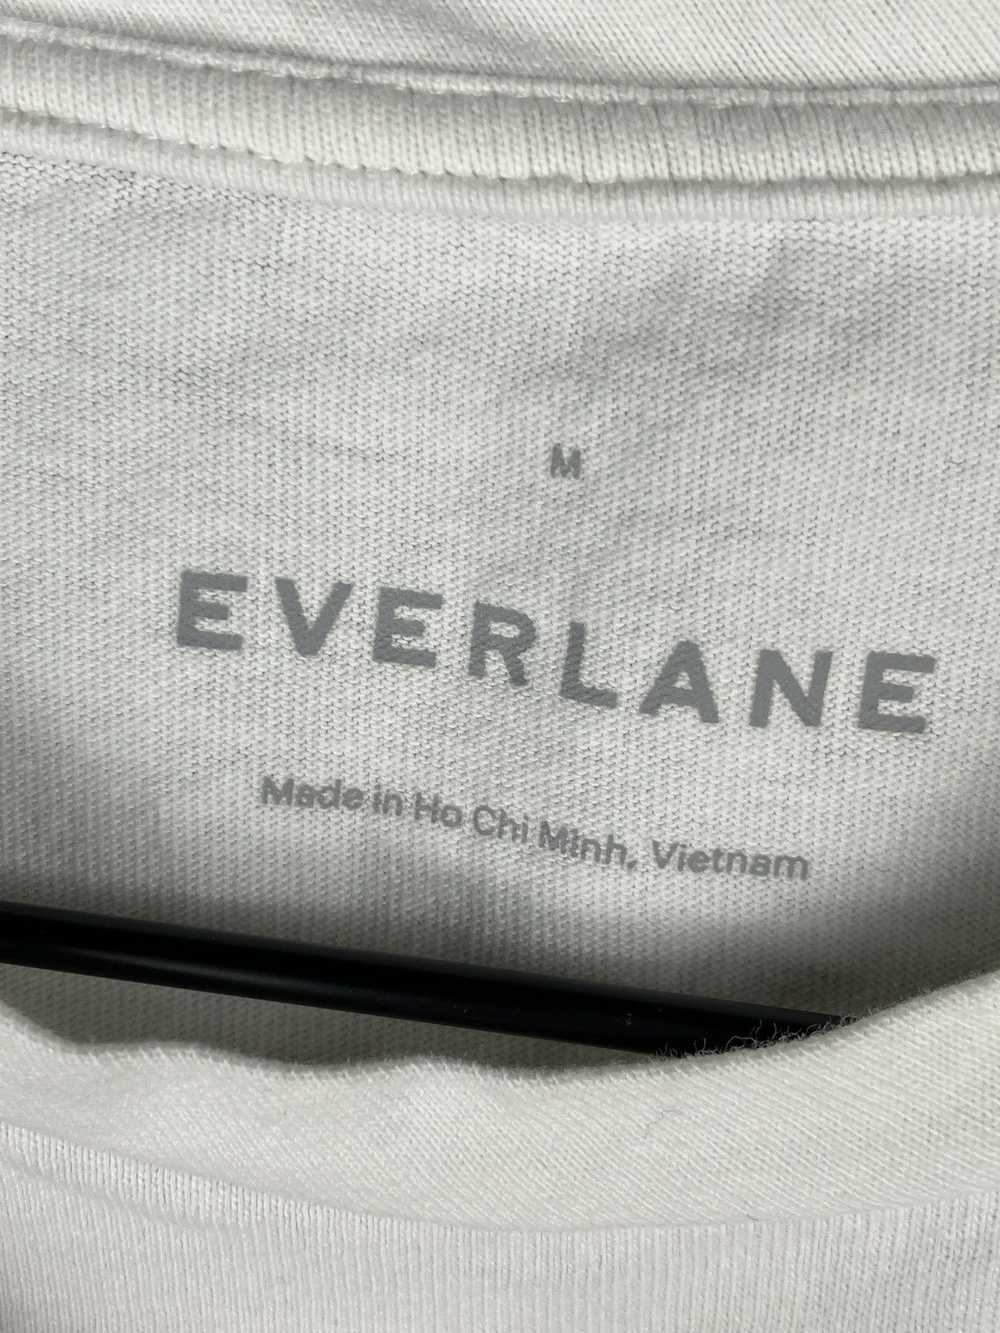 Everlane Everlane Plain White Tee - image 4